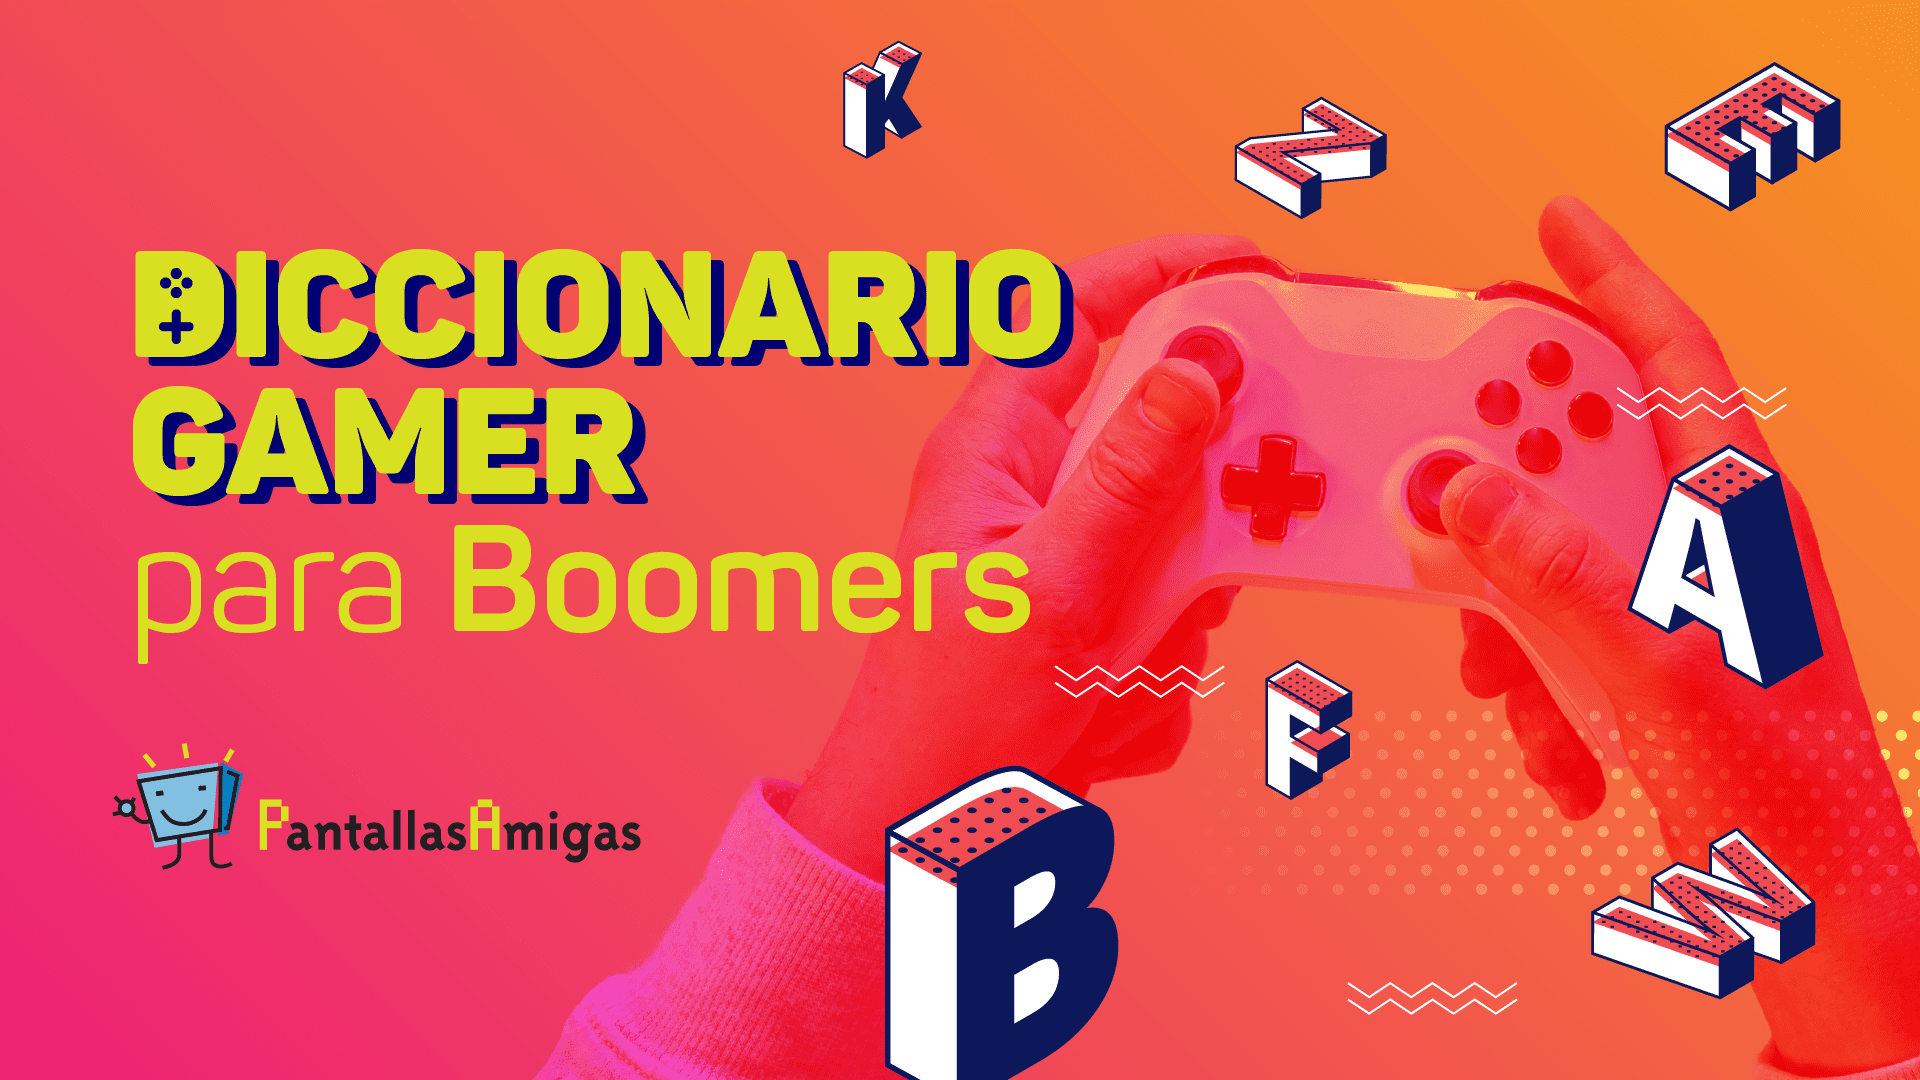 Diccionario gamer para boomers